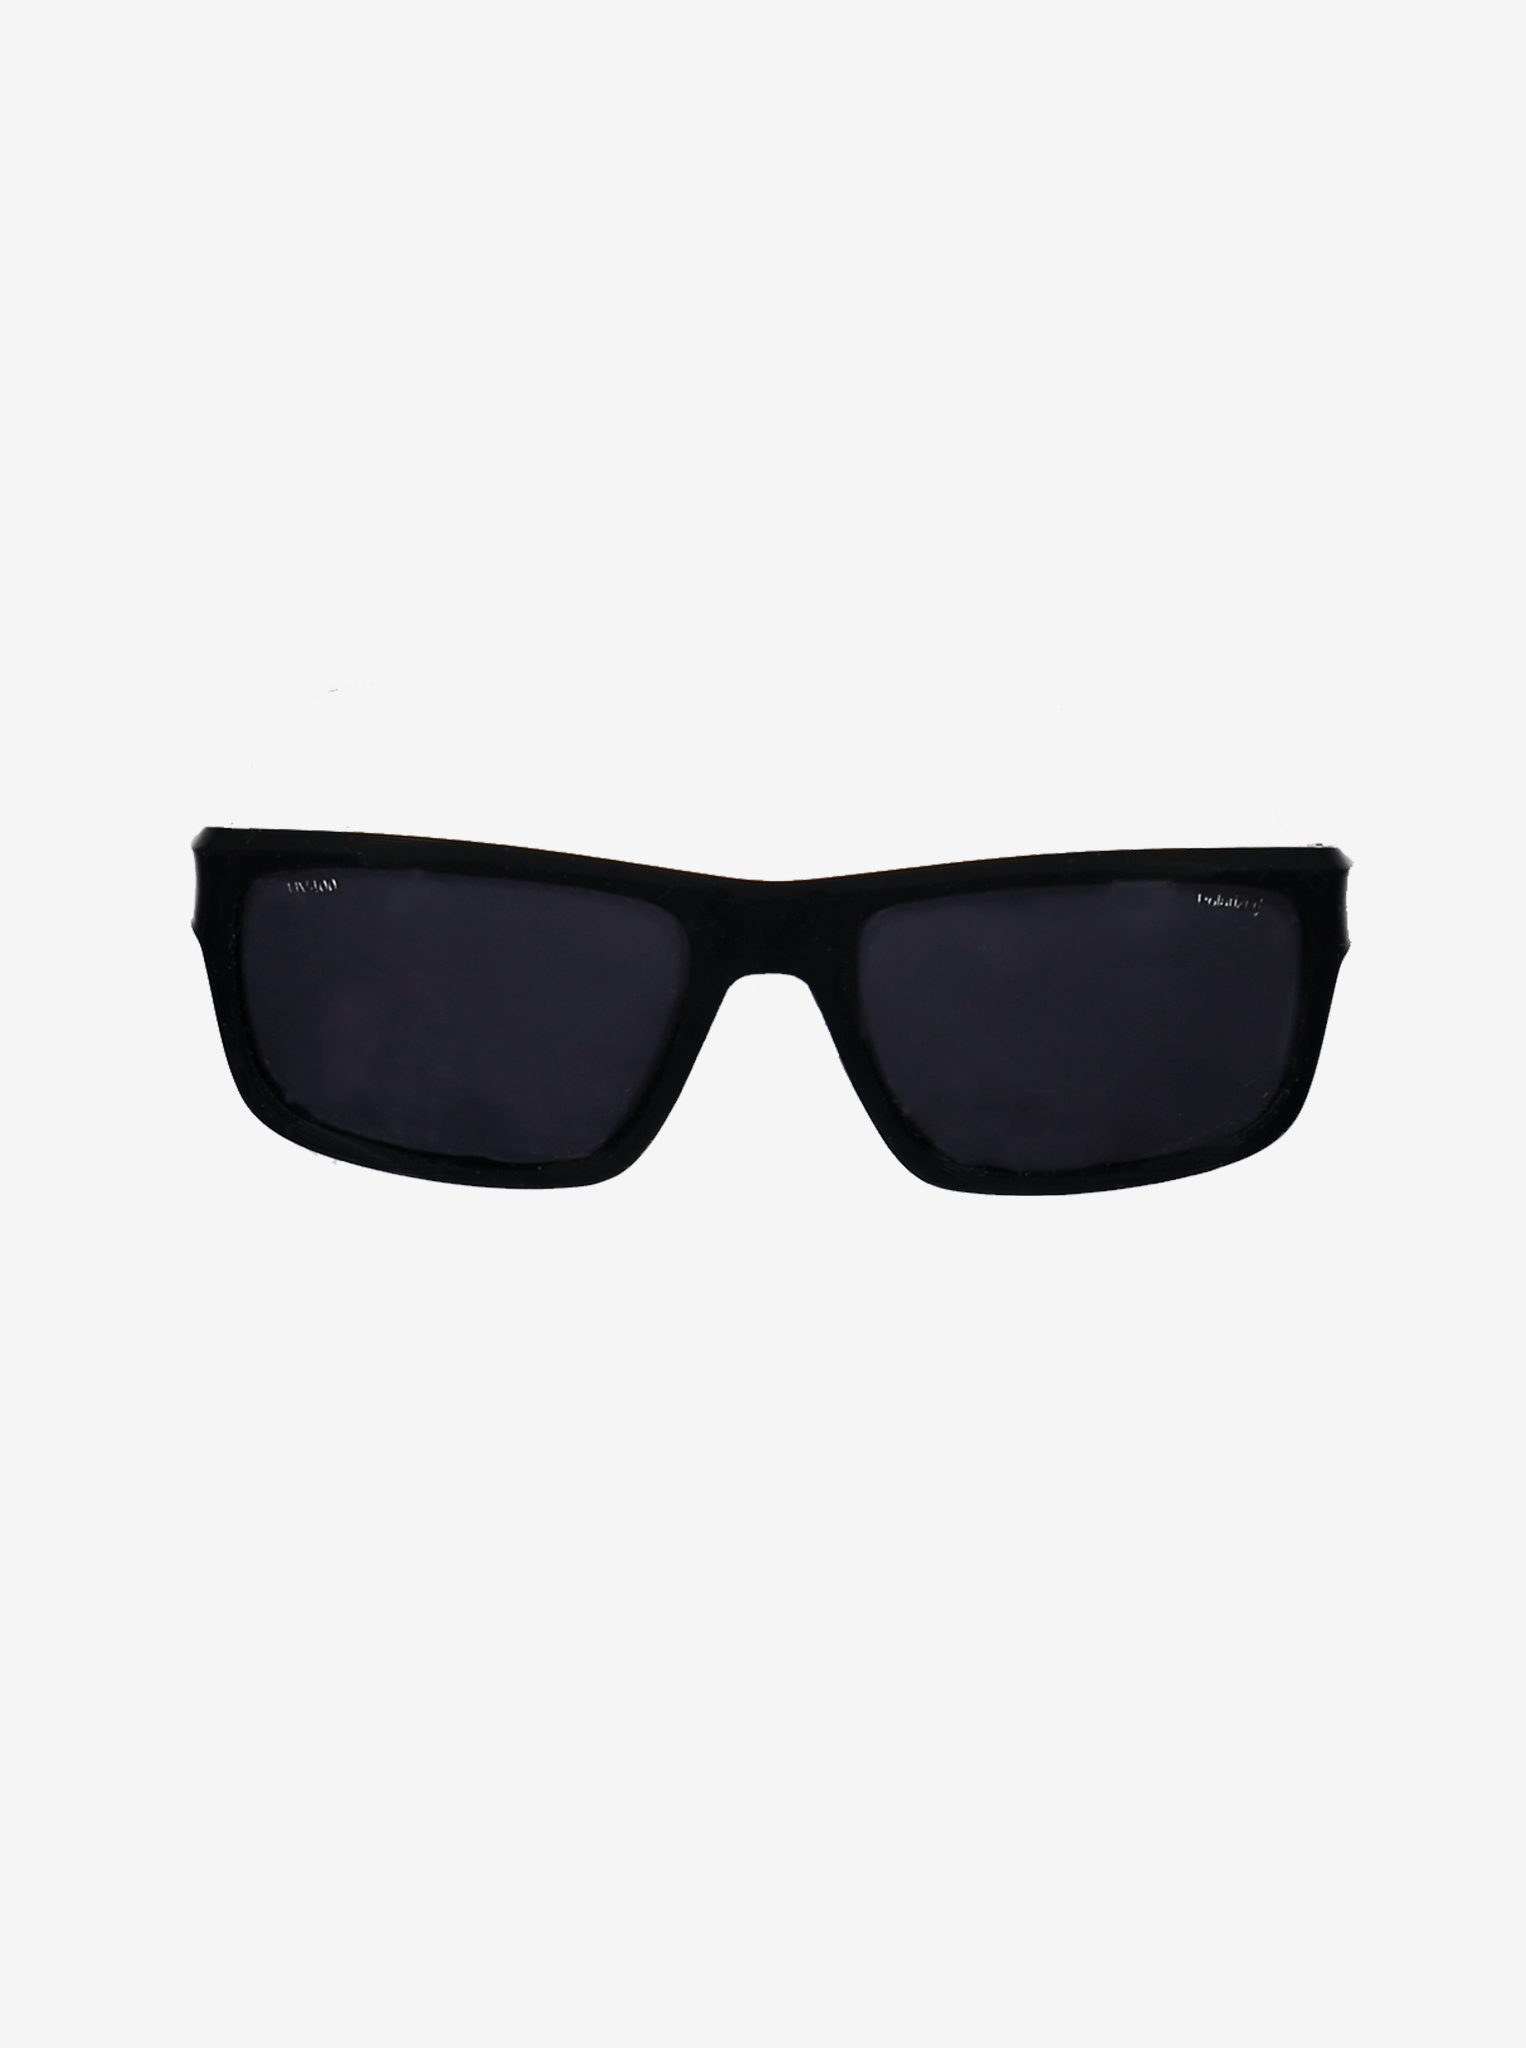 Kids UV Polarized Sunglasses 2-6Y+---Black---Unisex---2-6y